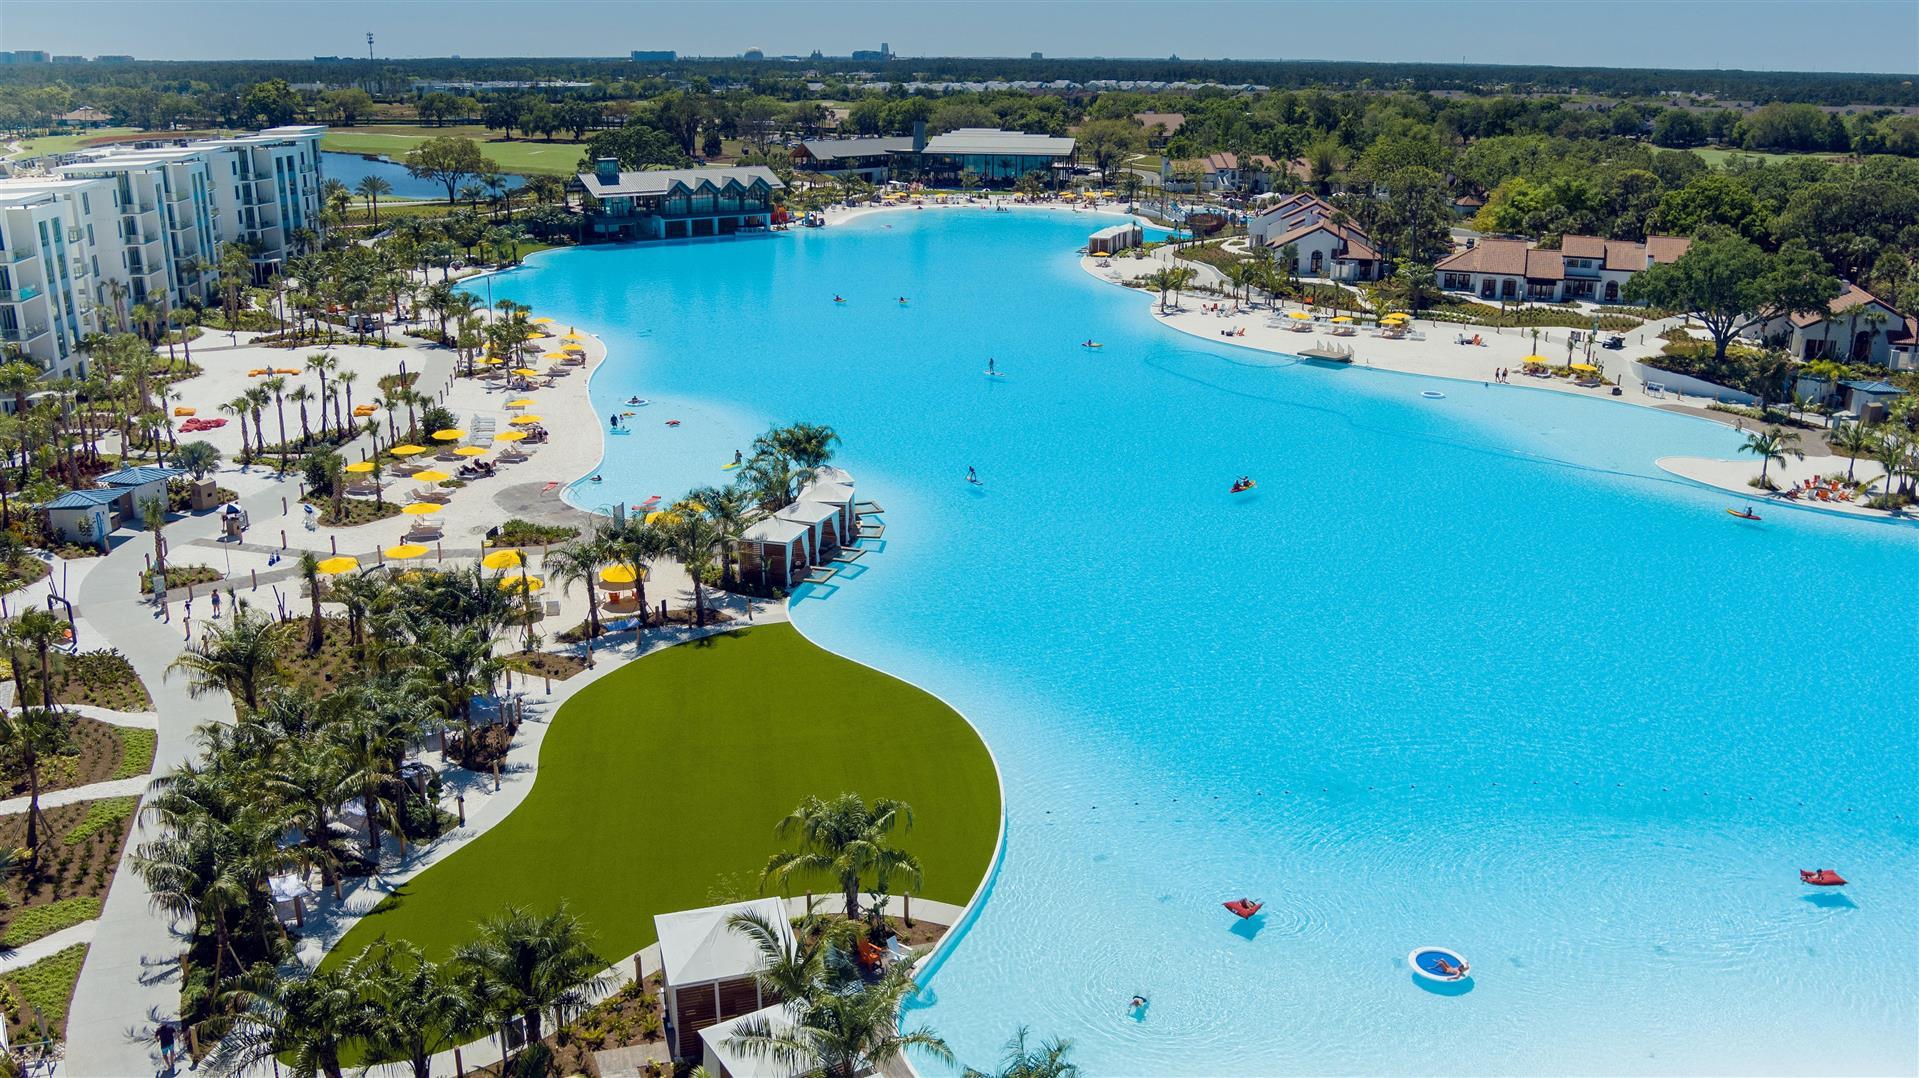 Evermore Orlando Resort in Orlando, FL